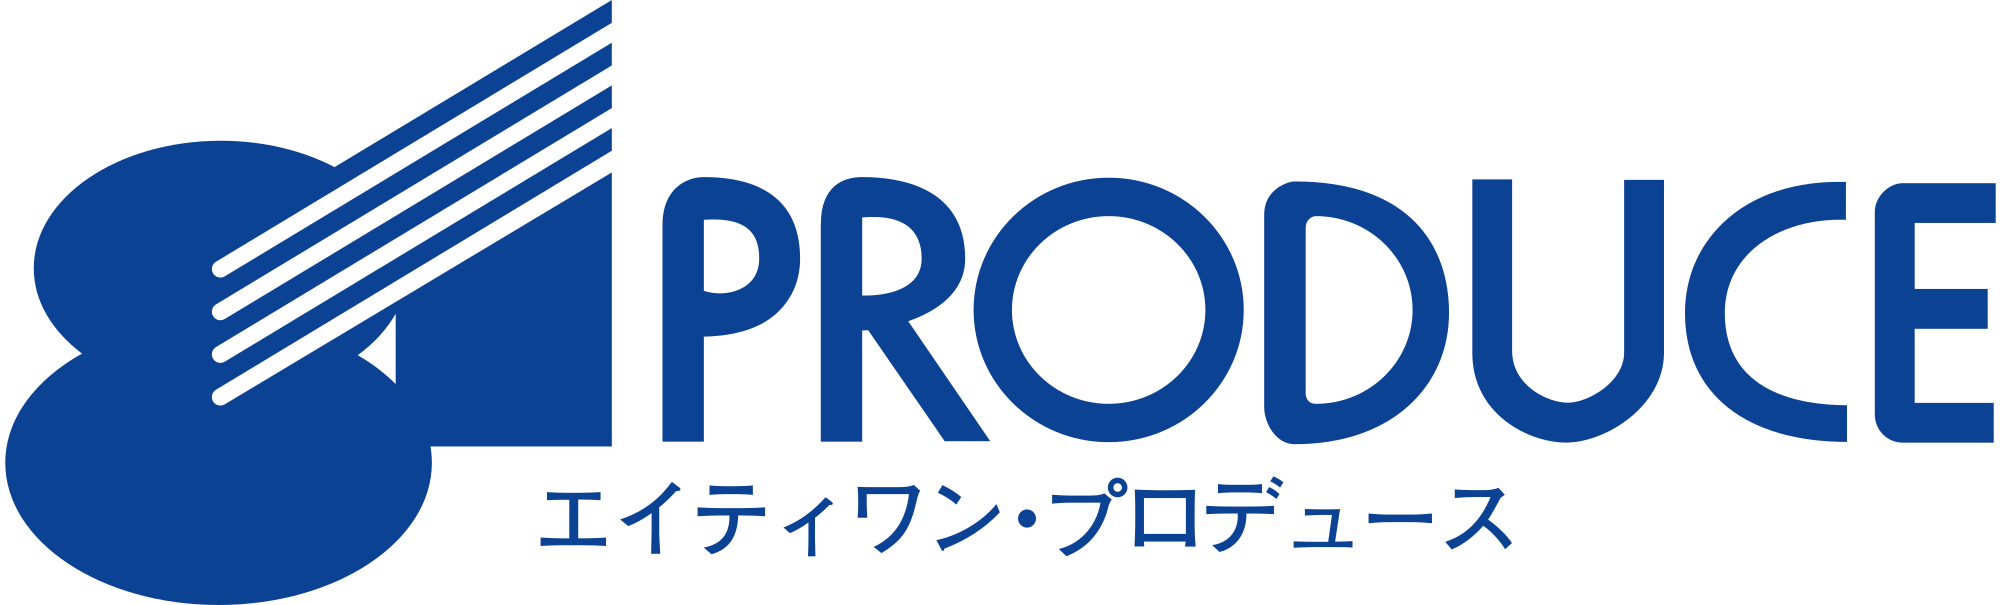 81 Produce Logo